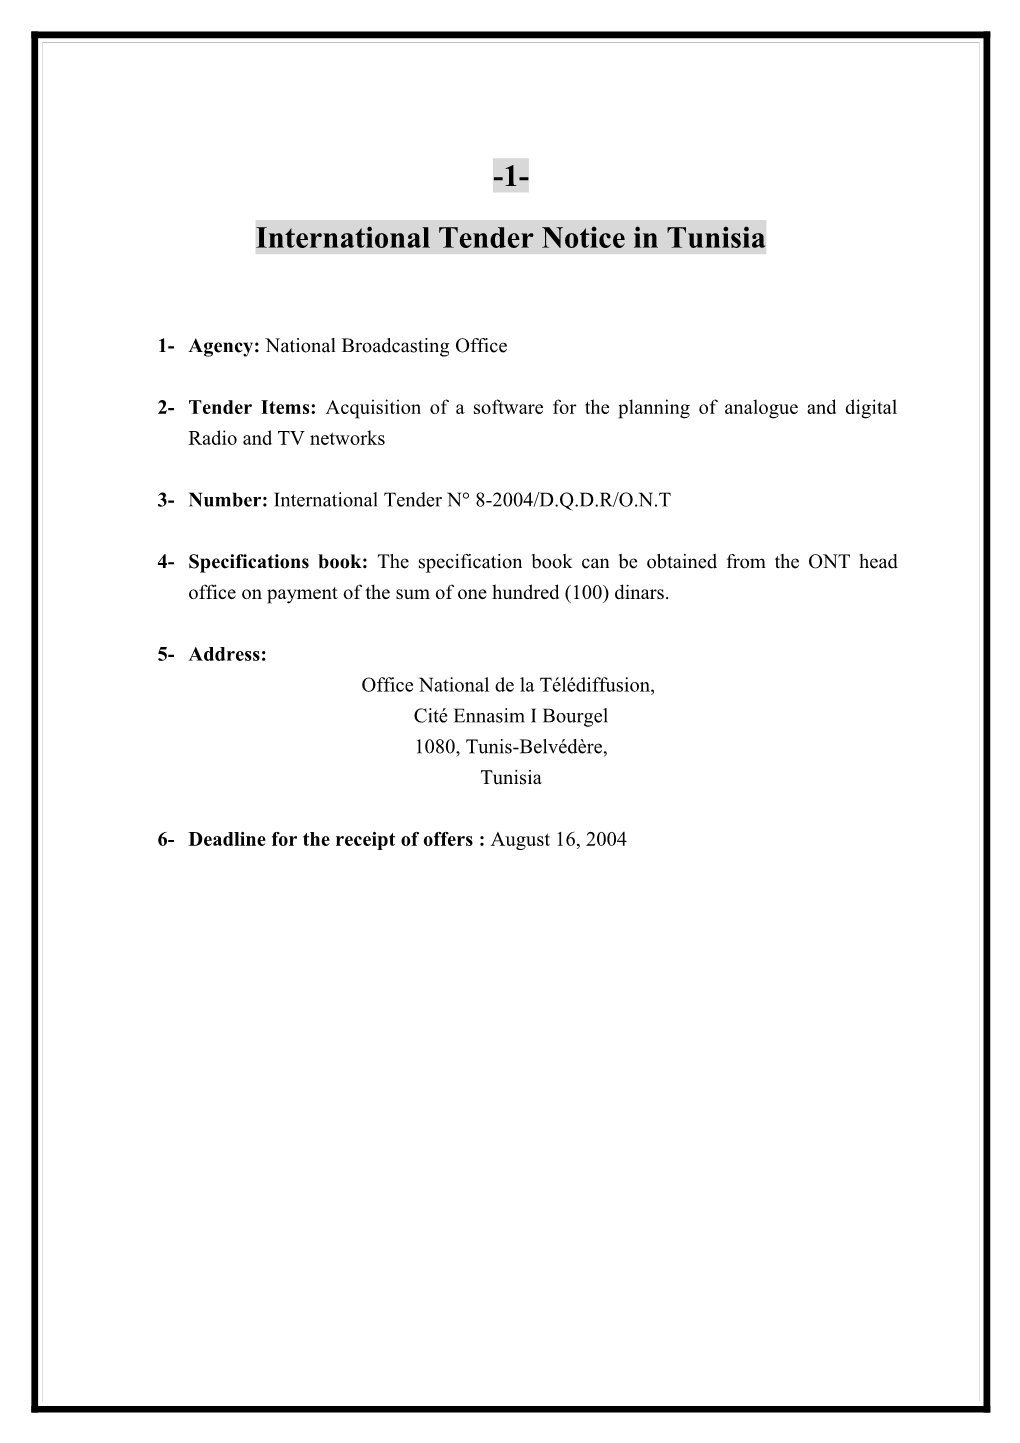 International Tender Notice in Tunisia